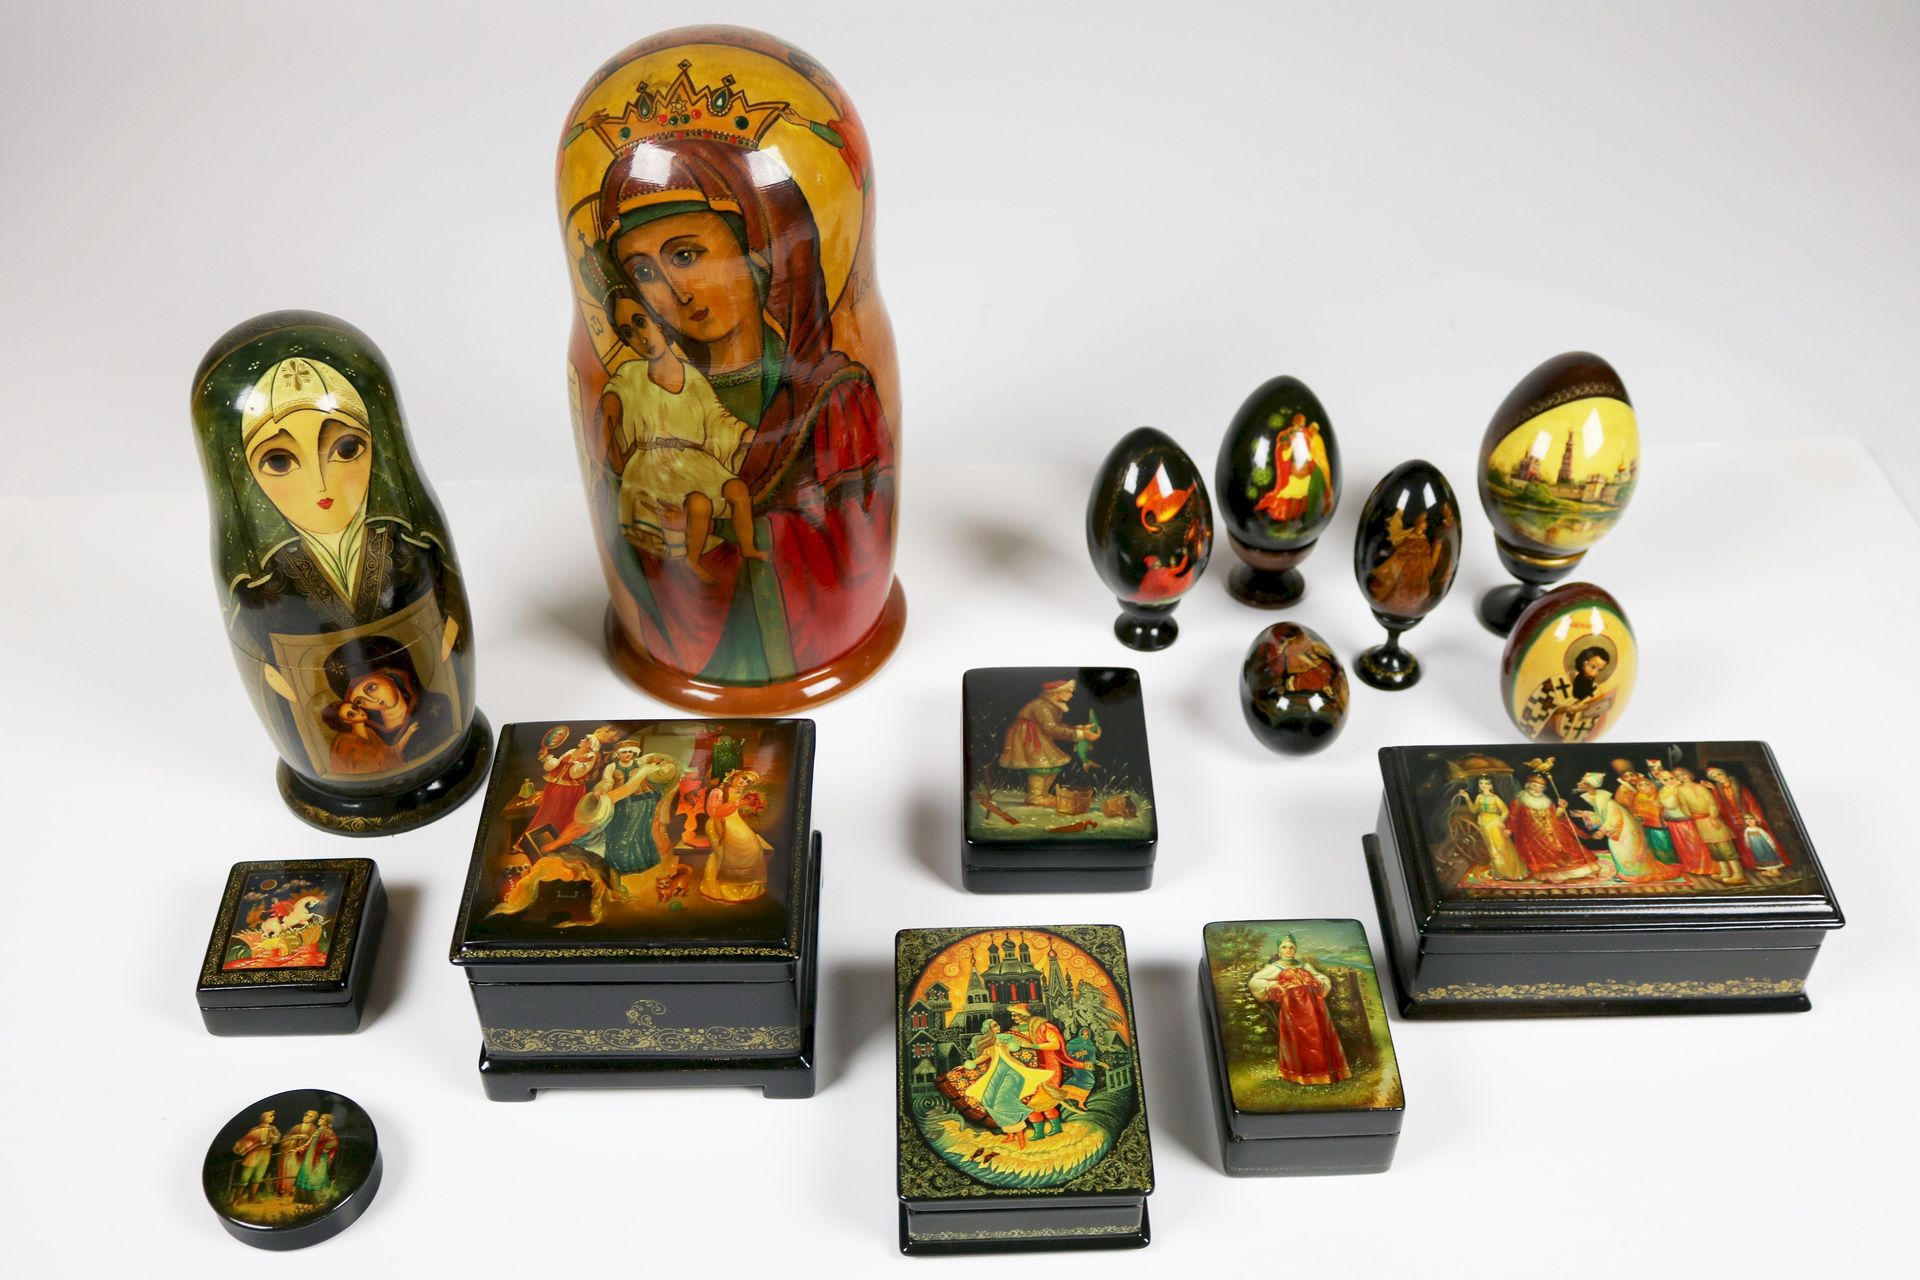 Null MOSCÚ, 1990 - 1992

Dos muñecas rusas, seis huevos y seis cajas



en mader&hellip;